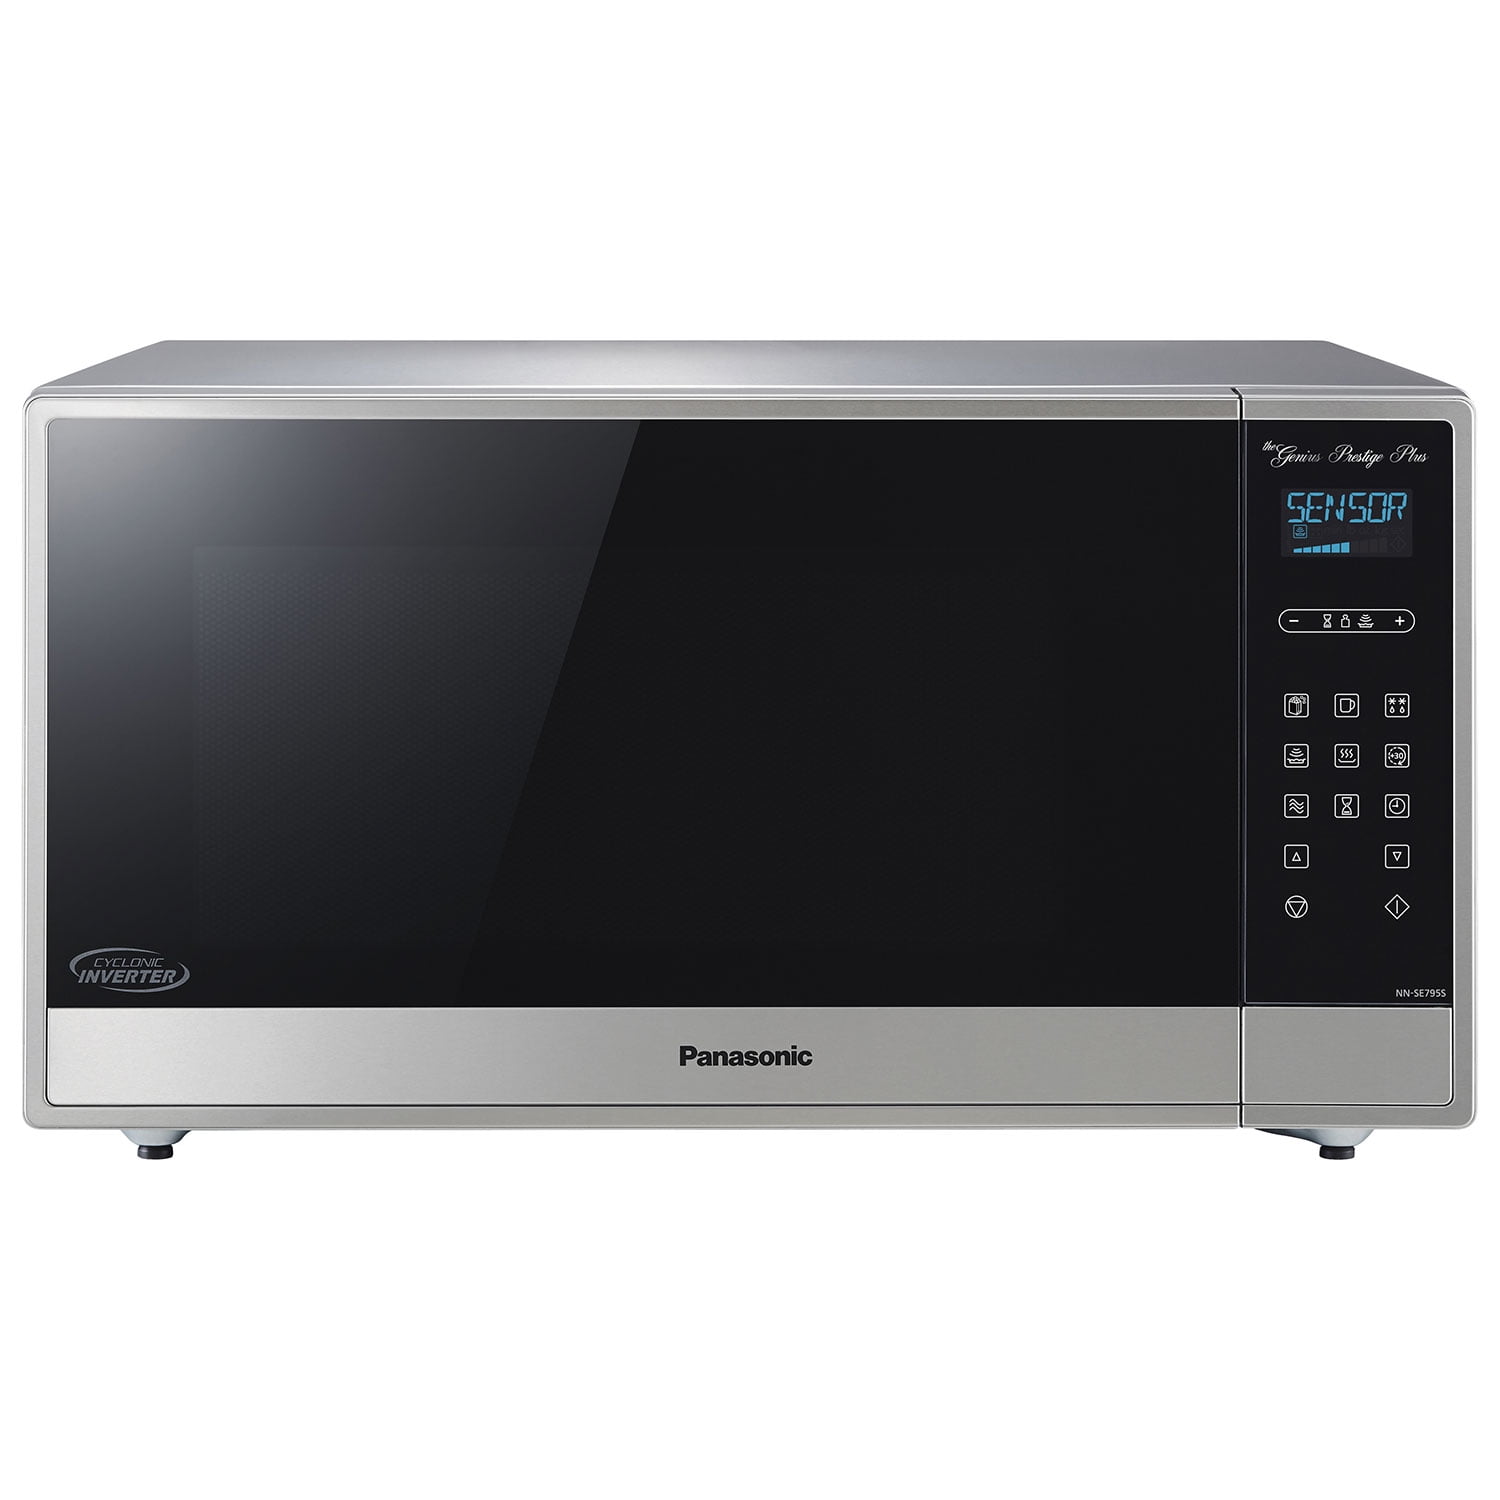 Panasonic Prestige Plus Microwave - 1.6 Cu. Ft. - NN-SE795S - Stainless